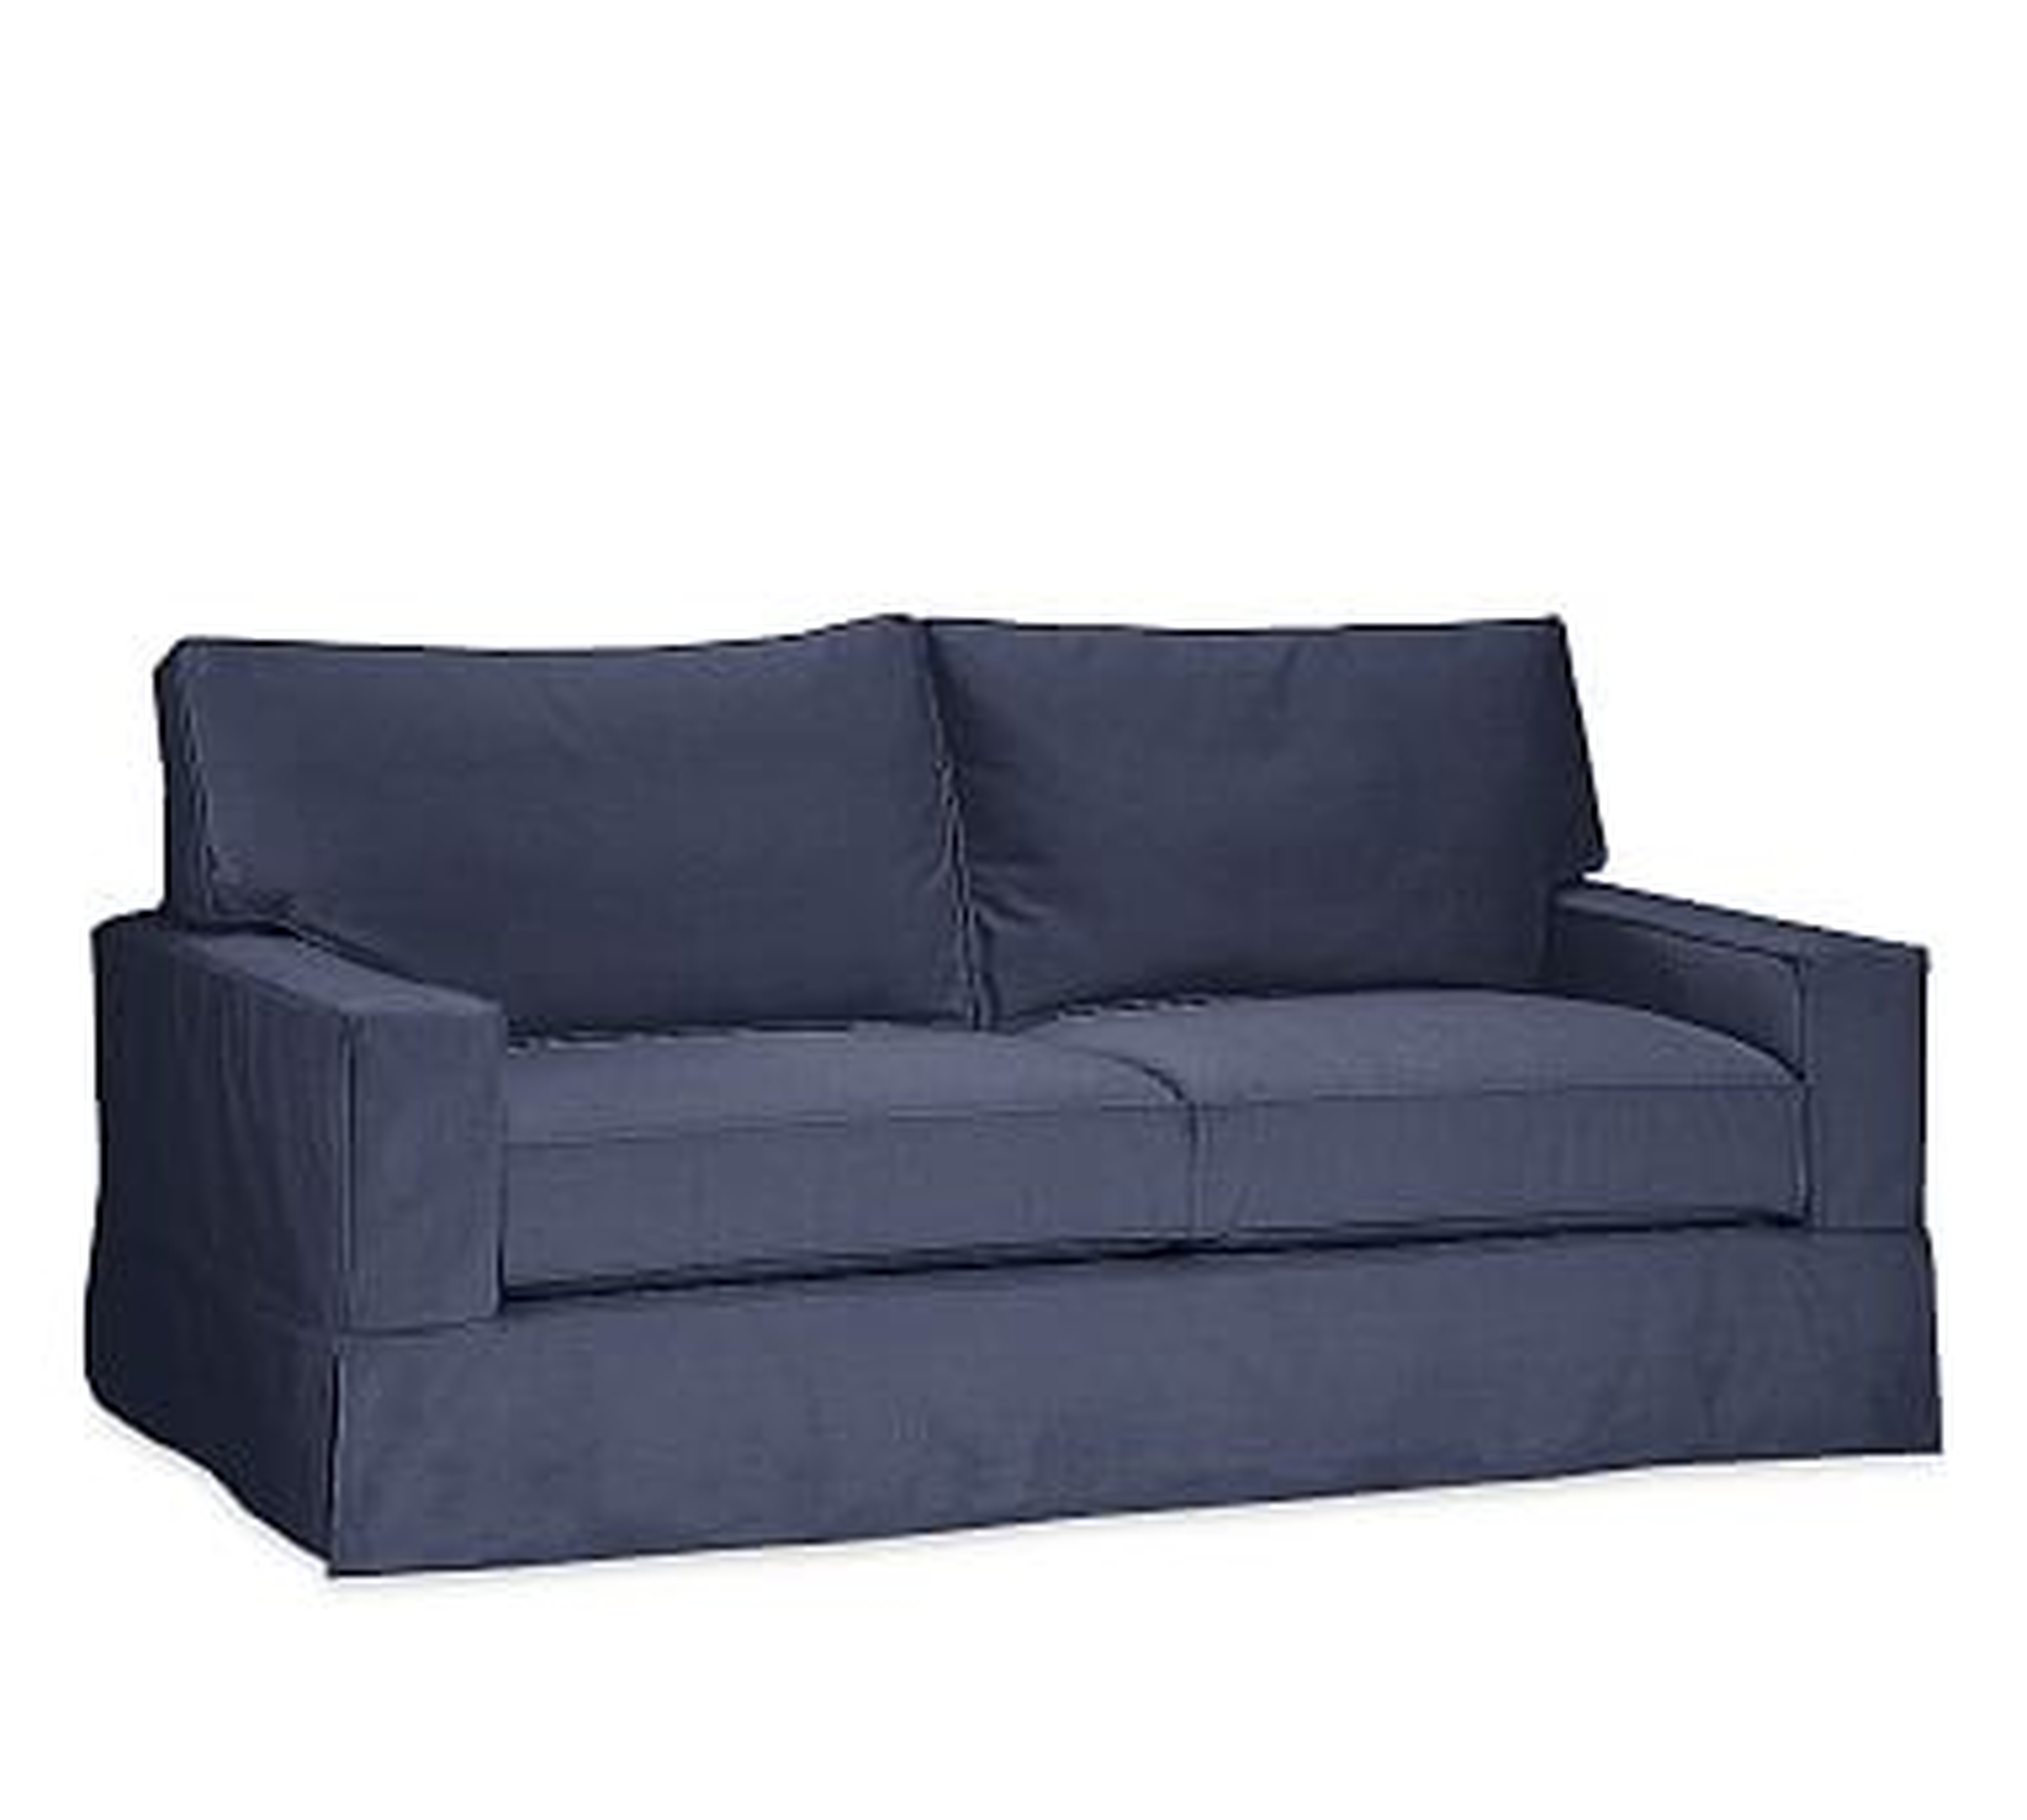 PB Comfort Square Arm Sleeper Sofa Slipcover, Box Edge, Premium Performance Basketweave Midnight Blue - Pottery Barn